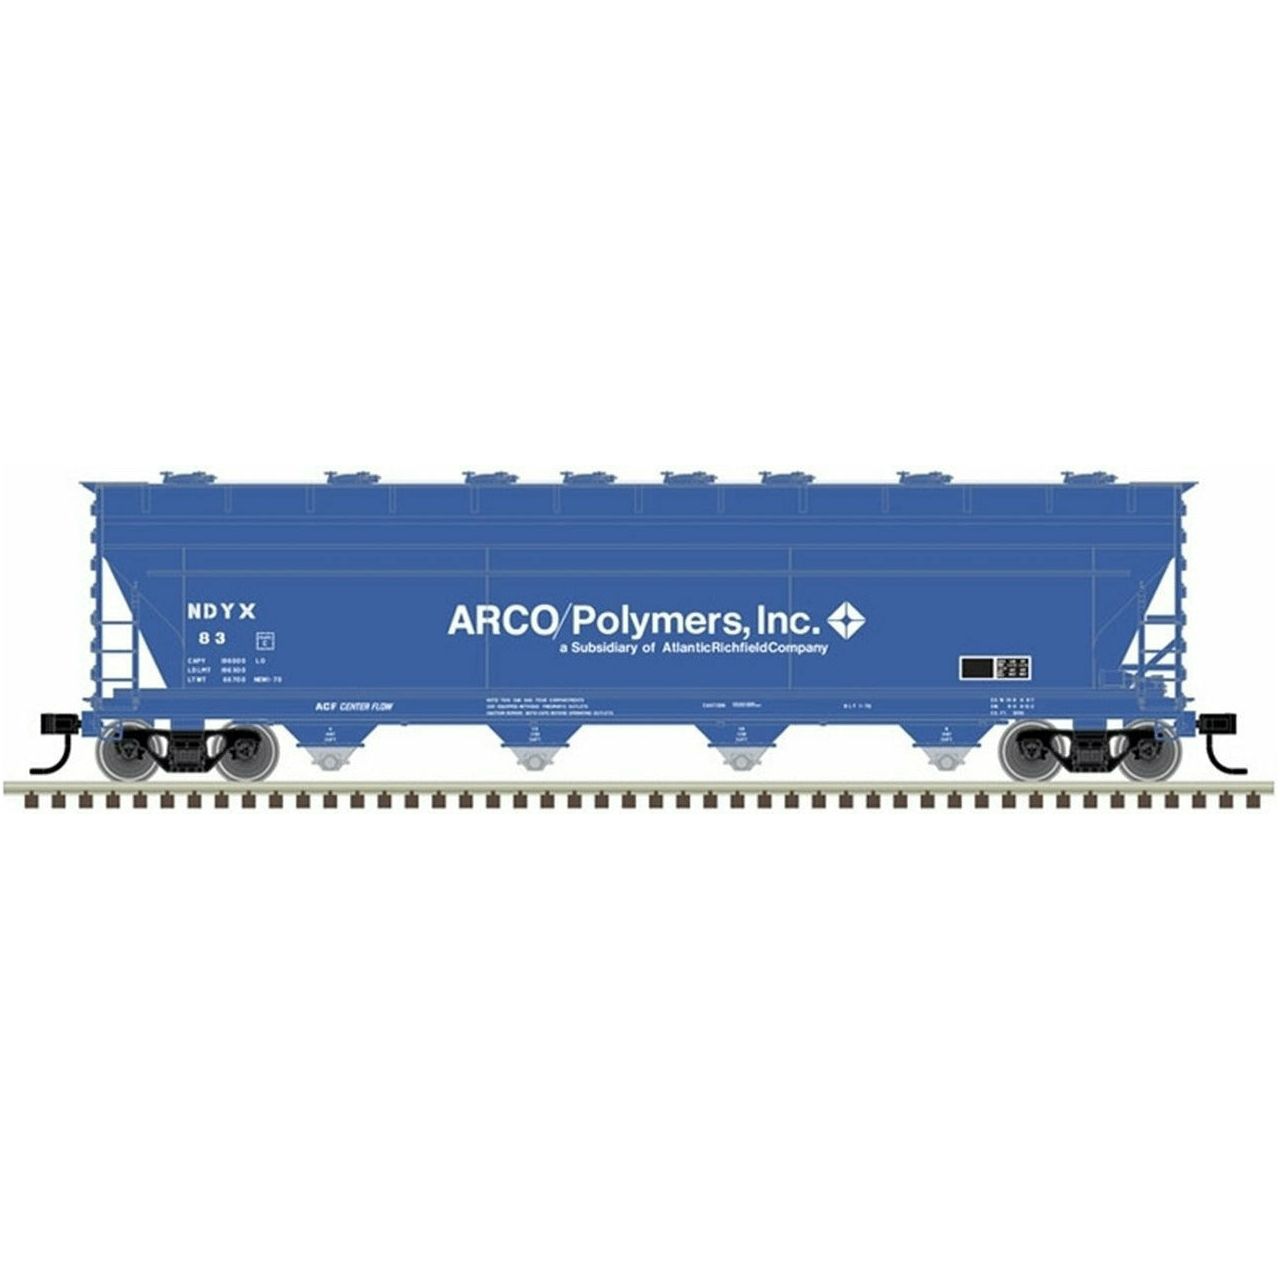 Atlas Master Line HO 20006379 ACF 5250 Covered Hopper, Arco Polymers #83